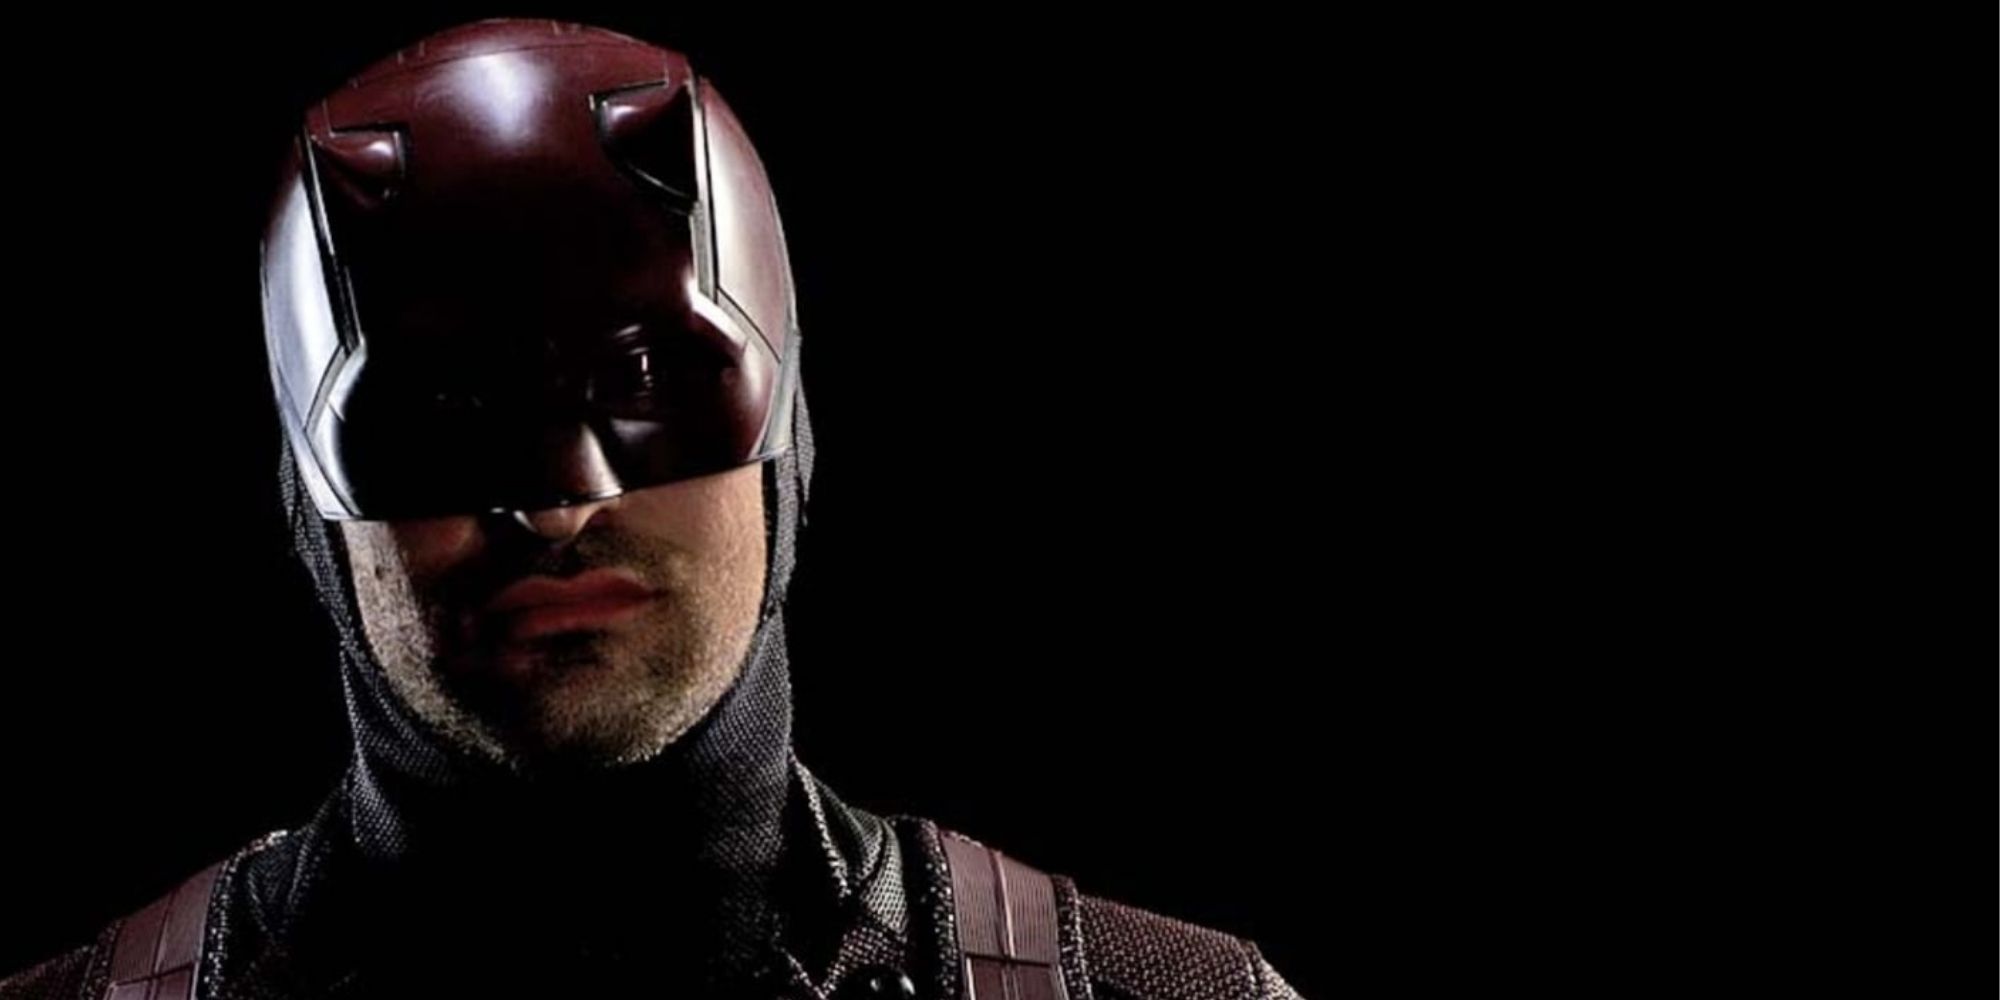 Promotional image of Daredevil Season 2.